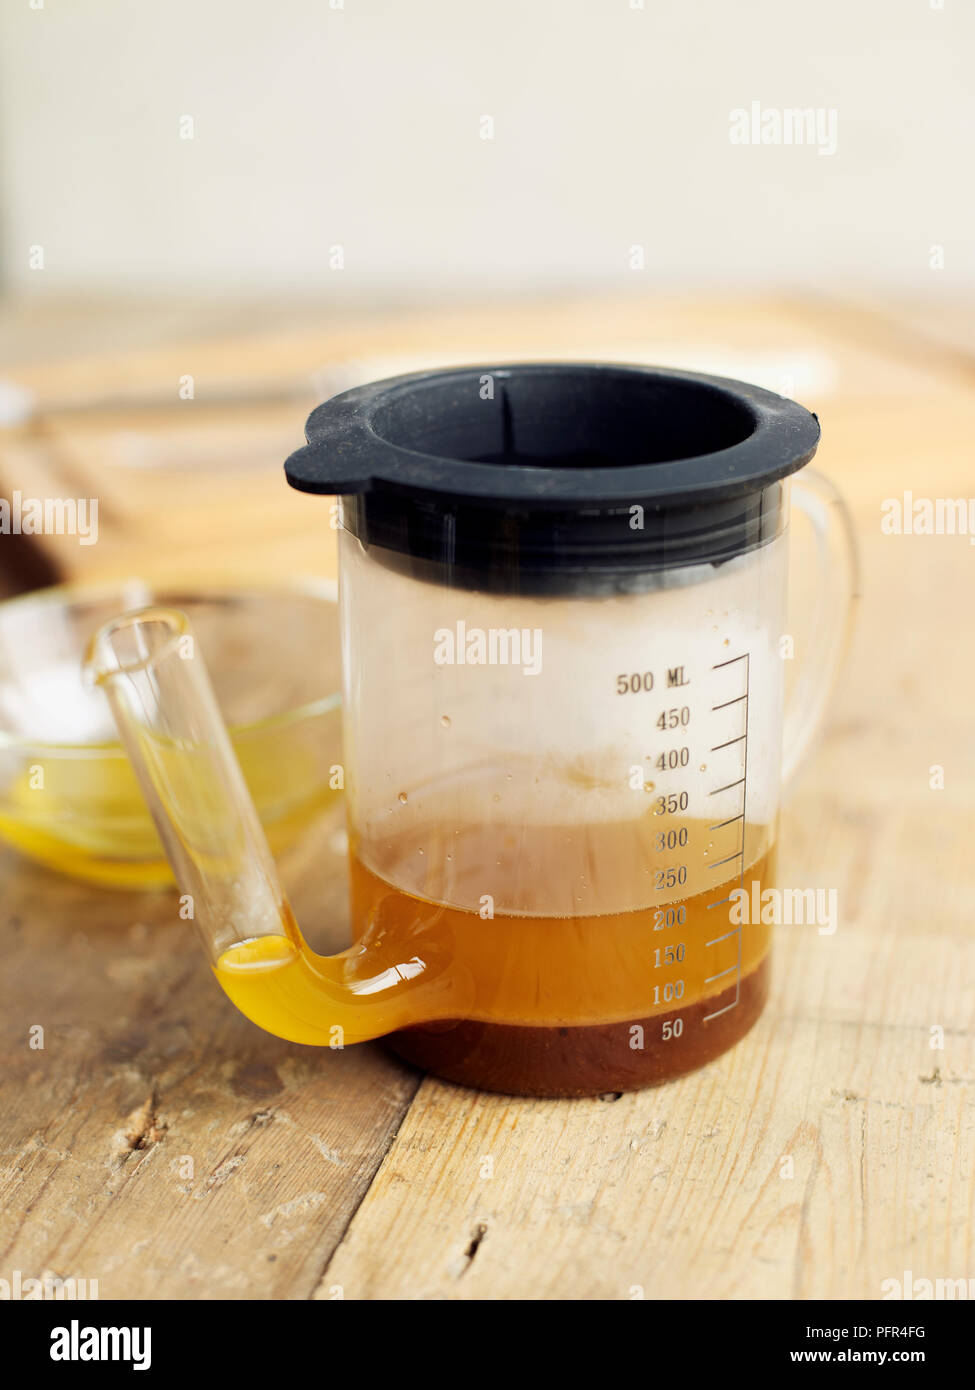 Gravy fat separator and measuring jug Stock Photo